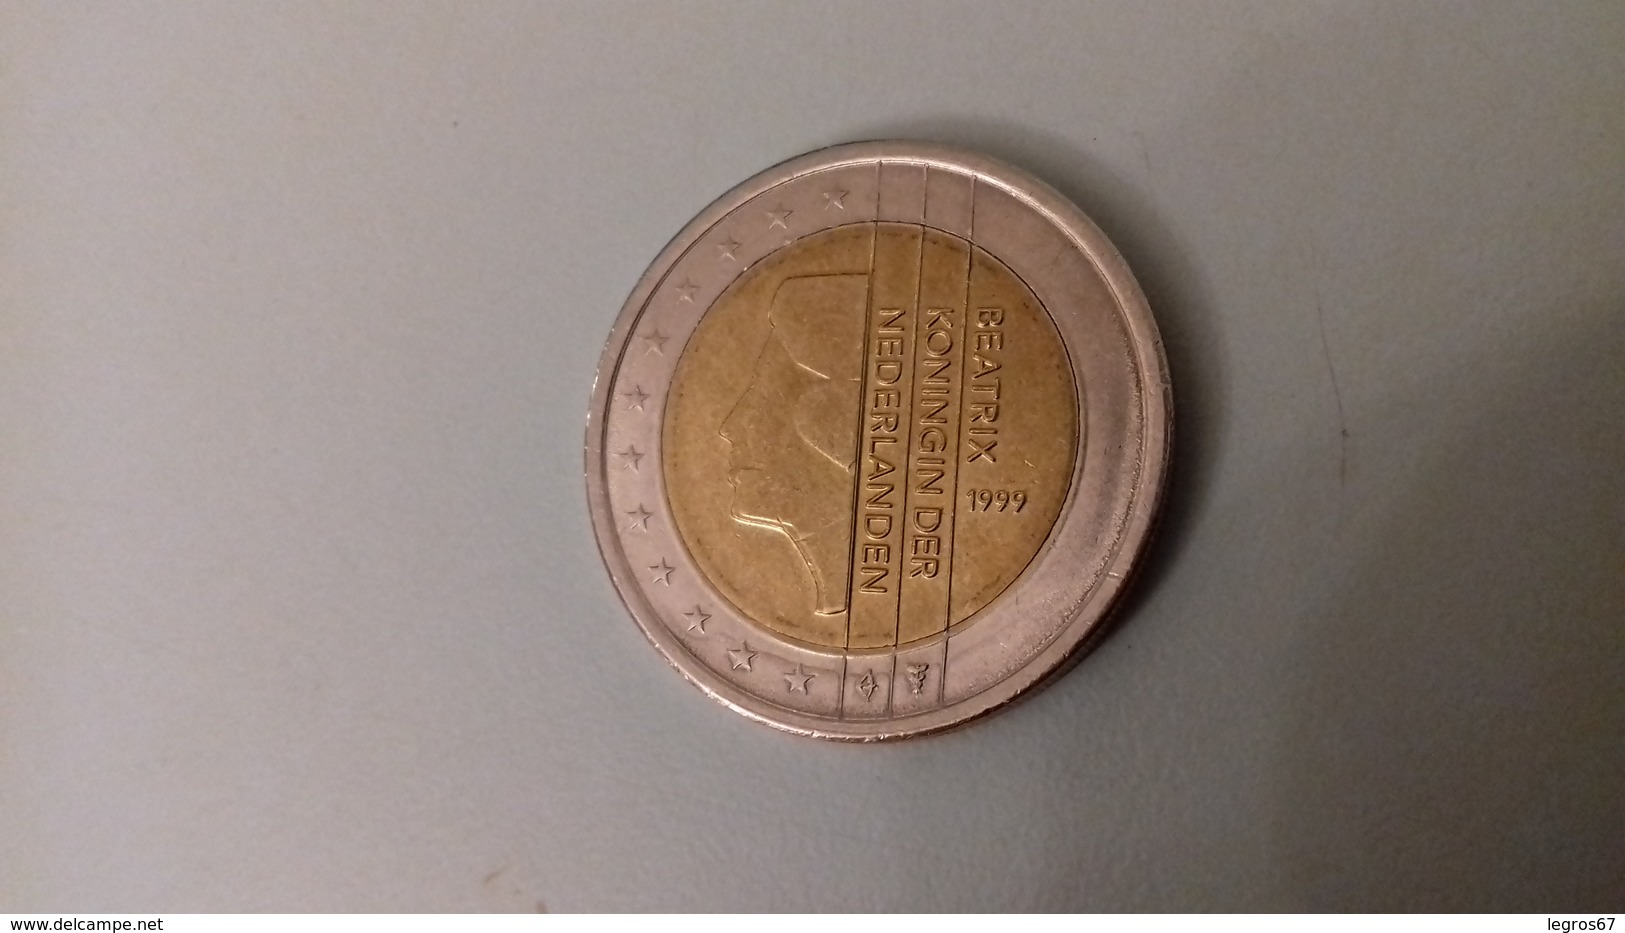 PIECE DE 2 EURO PAYS BAS 1999 - TYPE B - Netherlands